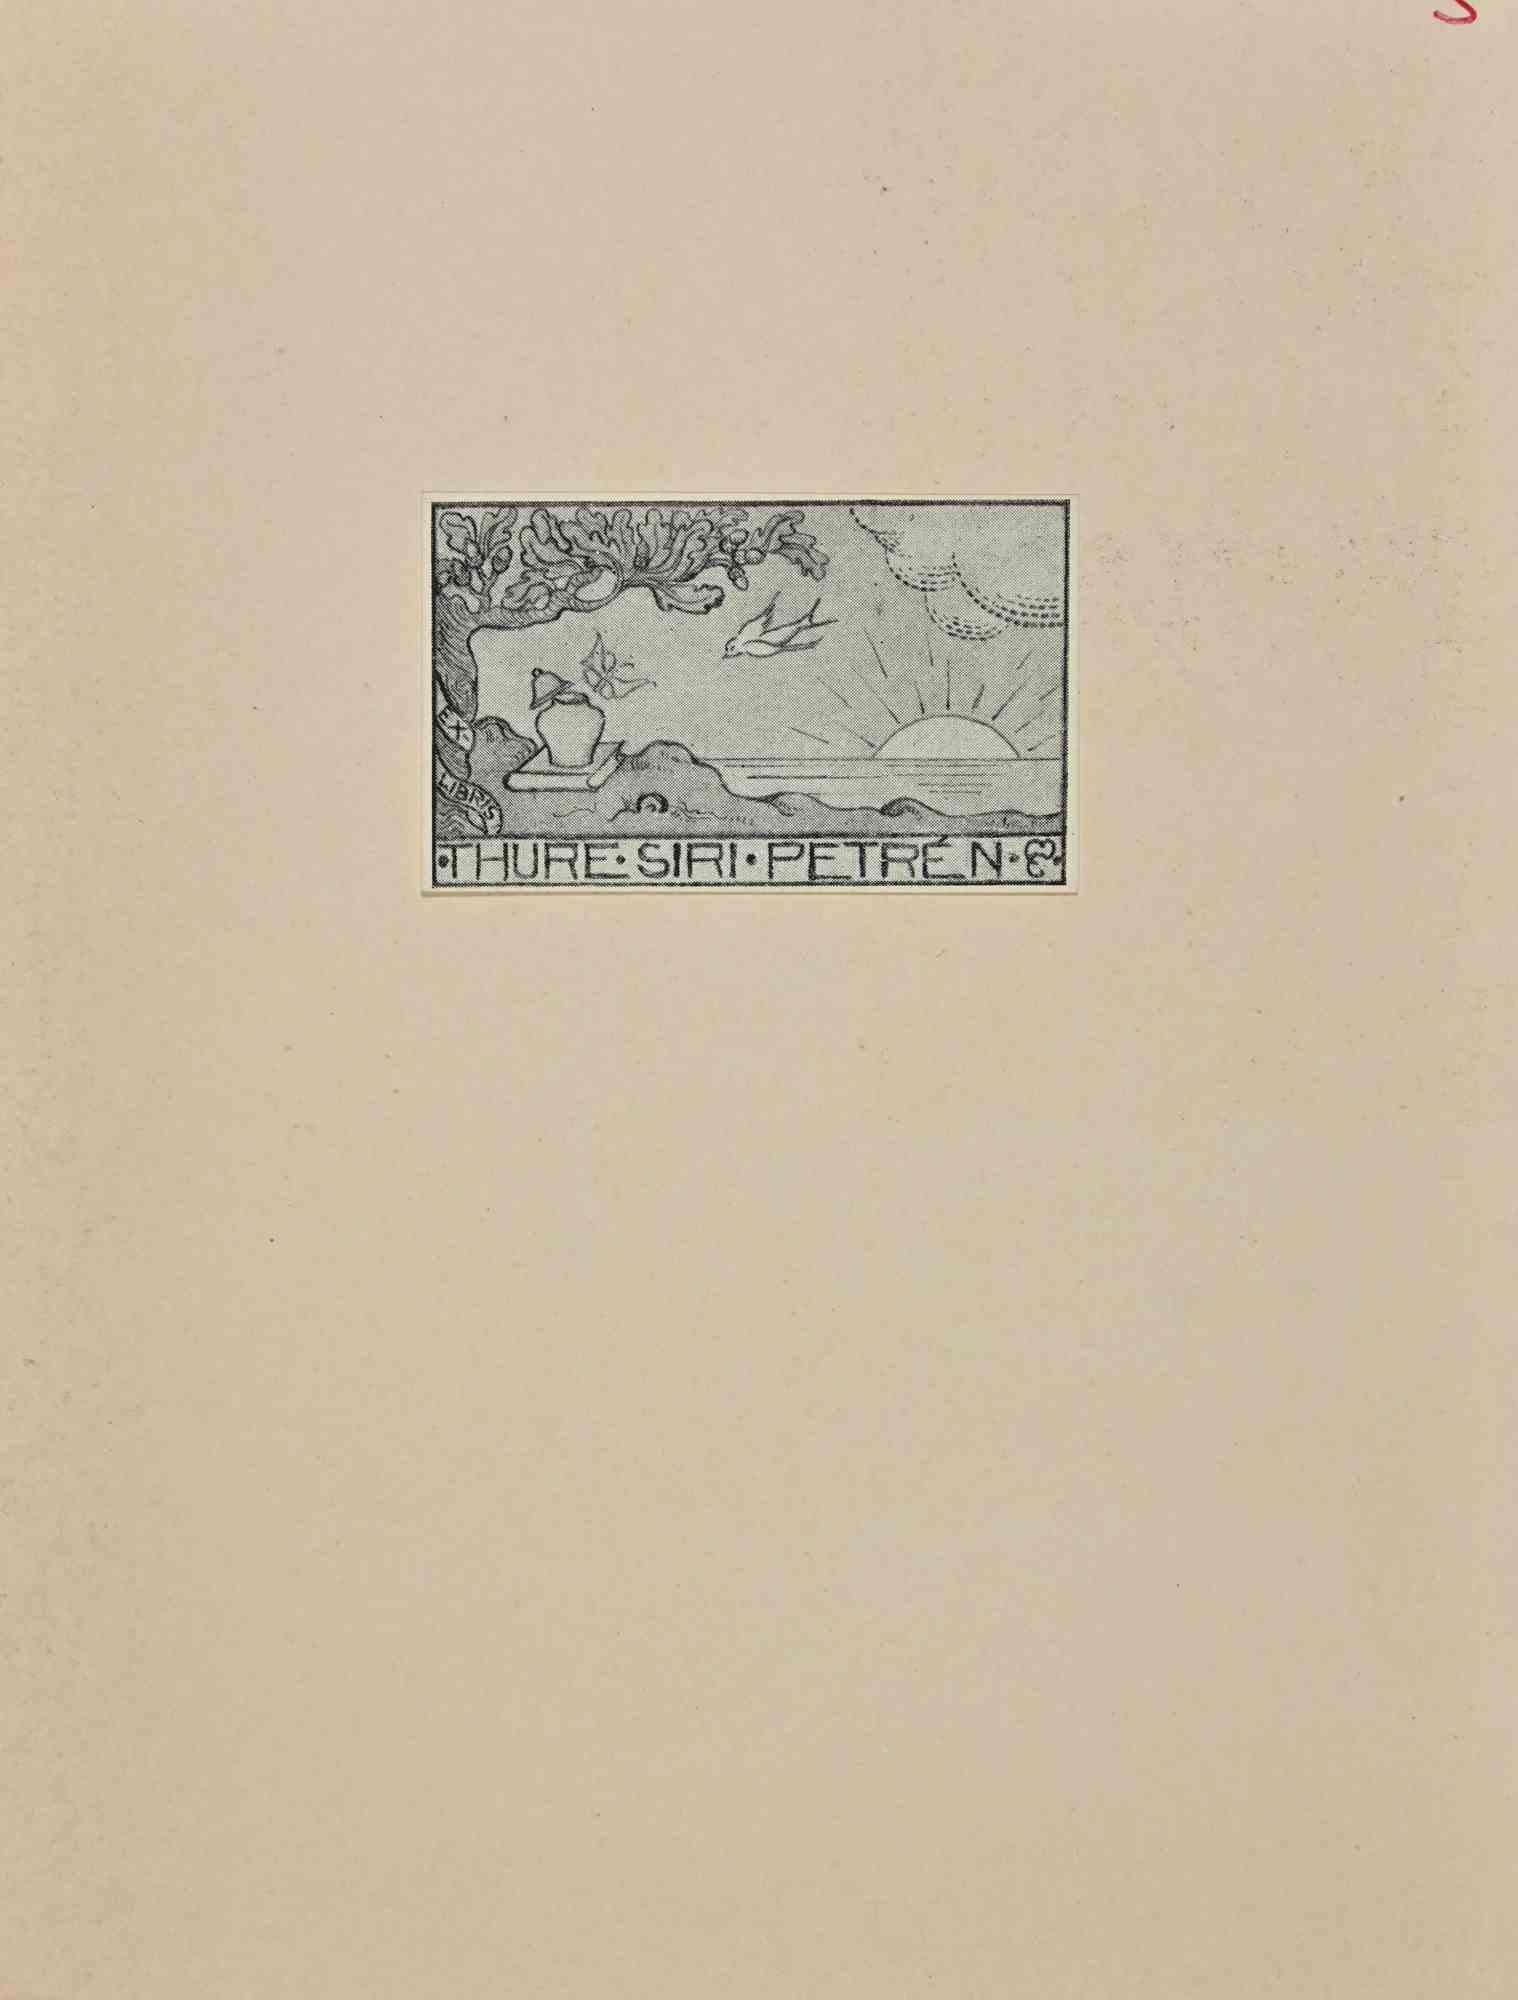 Ex Libris - Thure Siri Petrén - Woodcut - Mid 20th Century